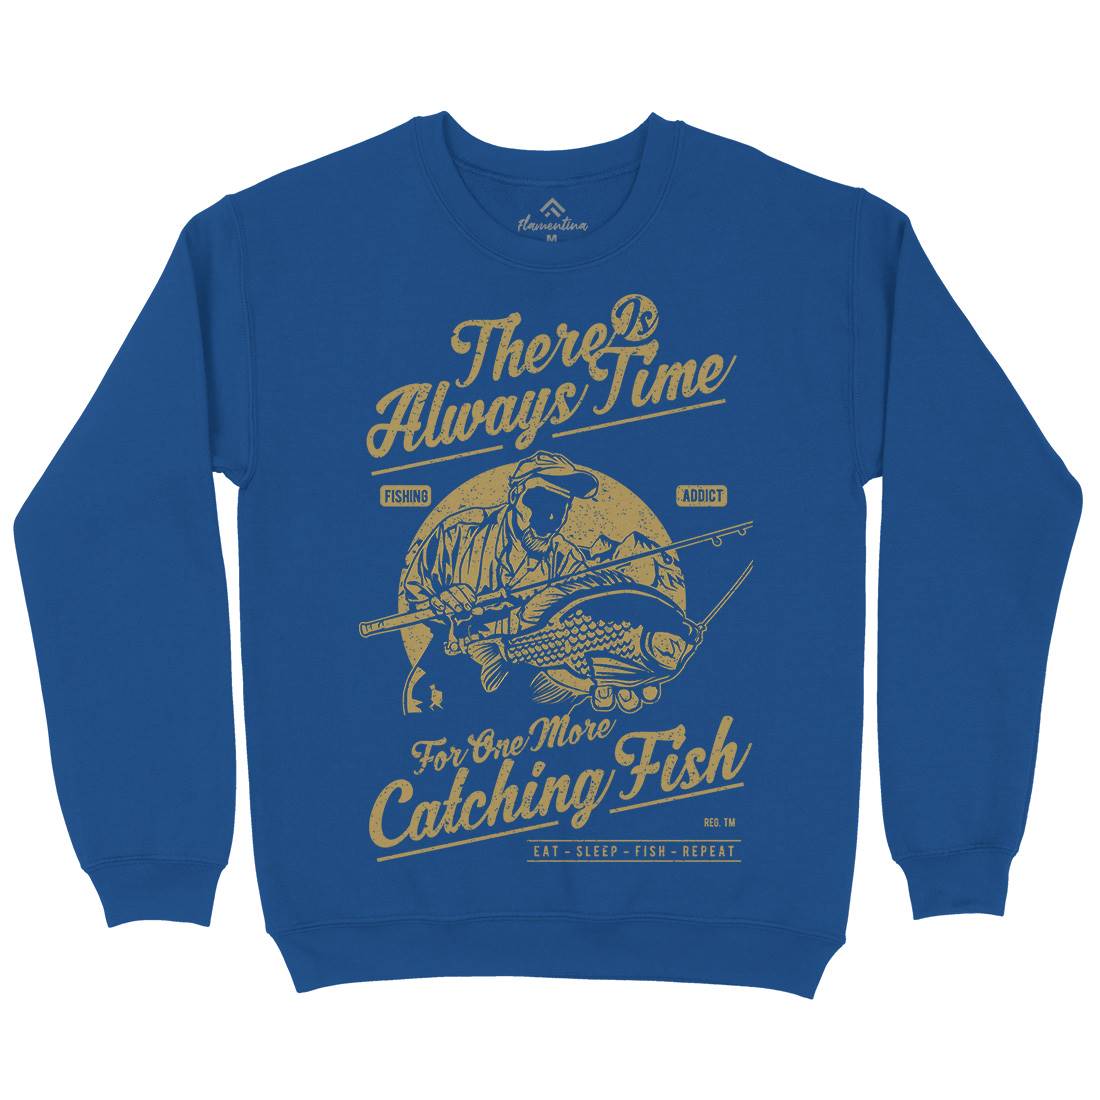 One More Catching Kids Crew Neck Sweatshirt Fishing A731